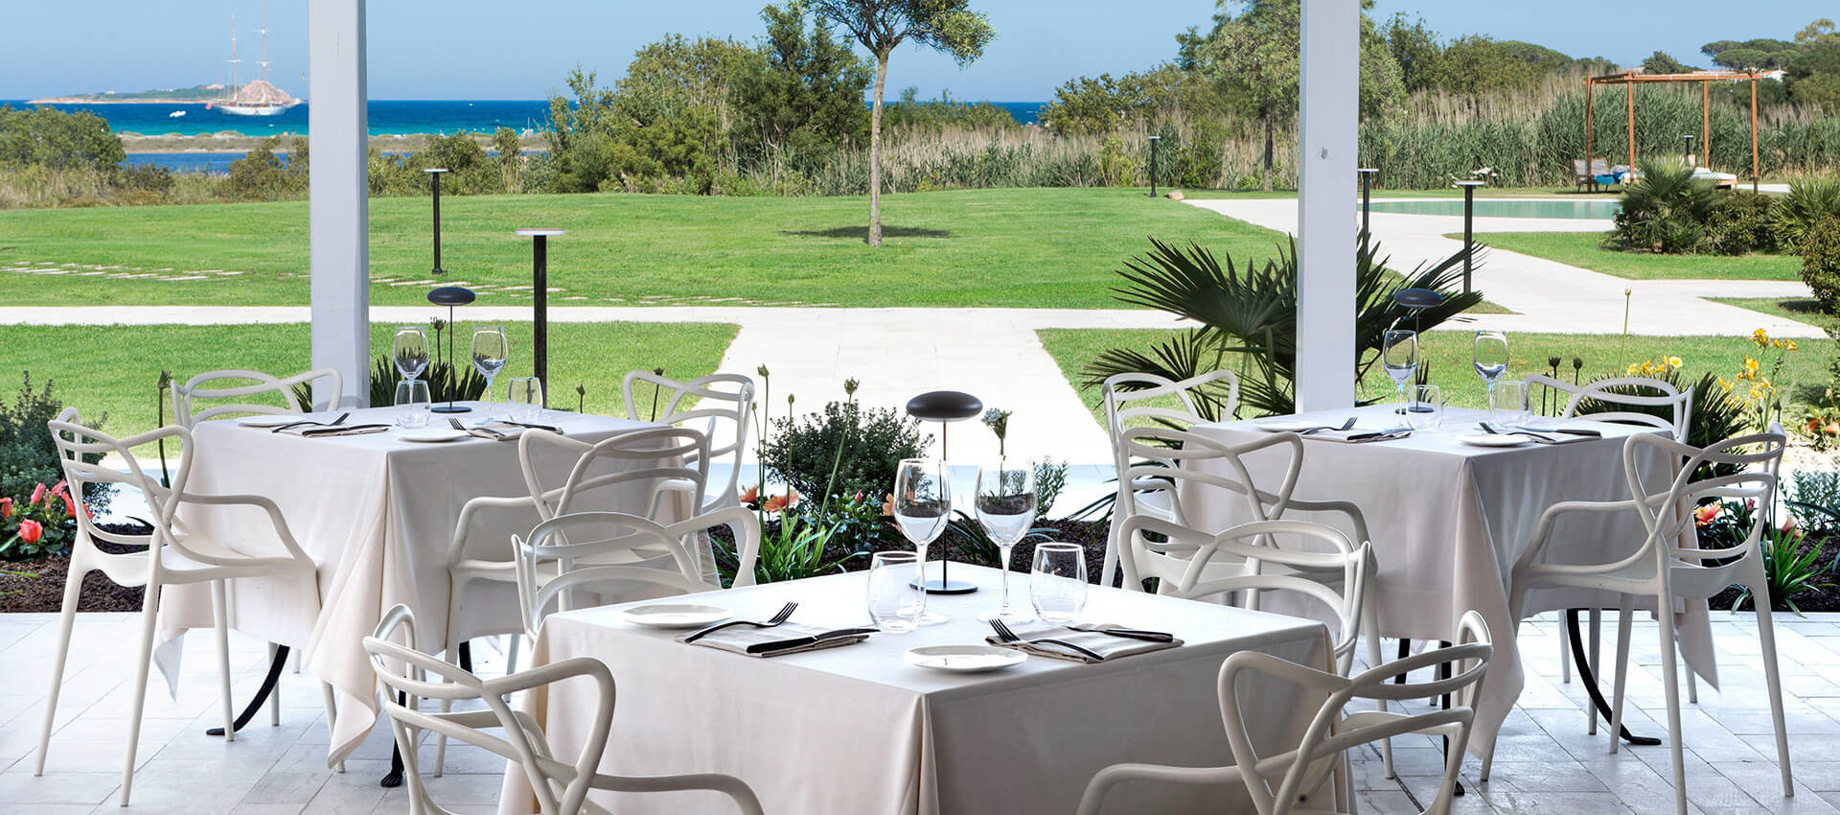 Baglioni Resort Sardinia - San Teodoro, Sardegna, Italy - Ruia Restaurant Ocean View Terrace